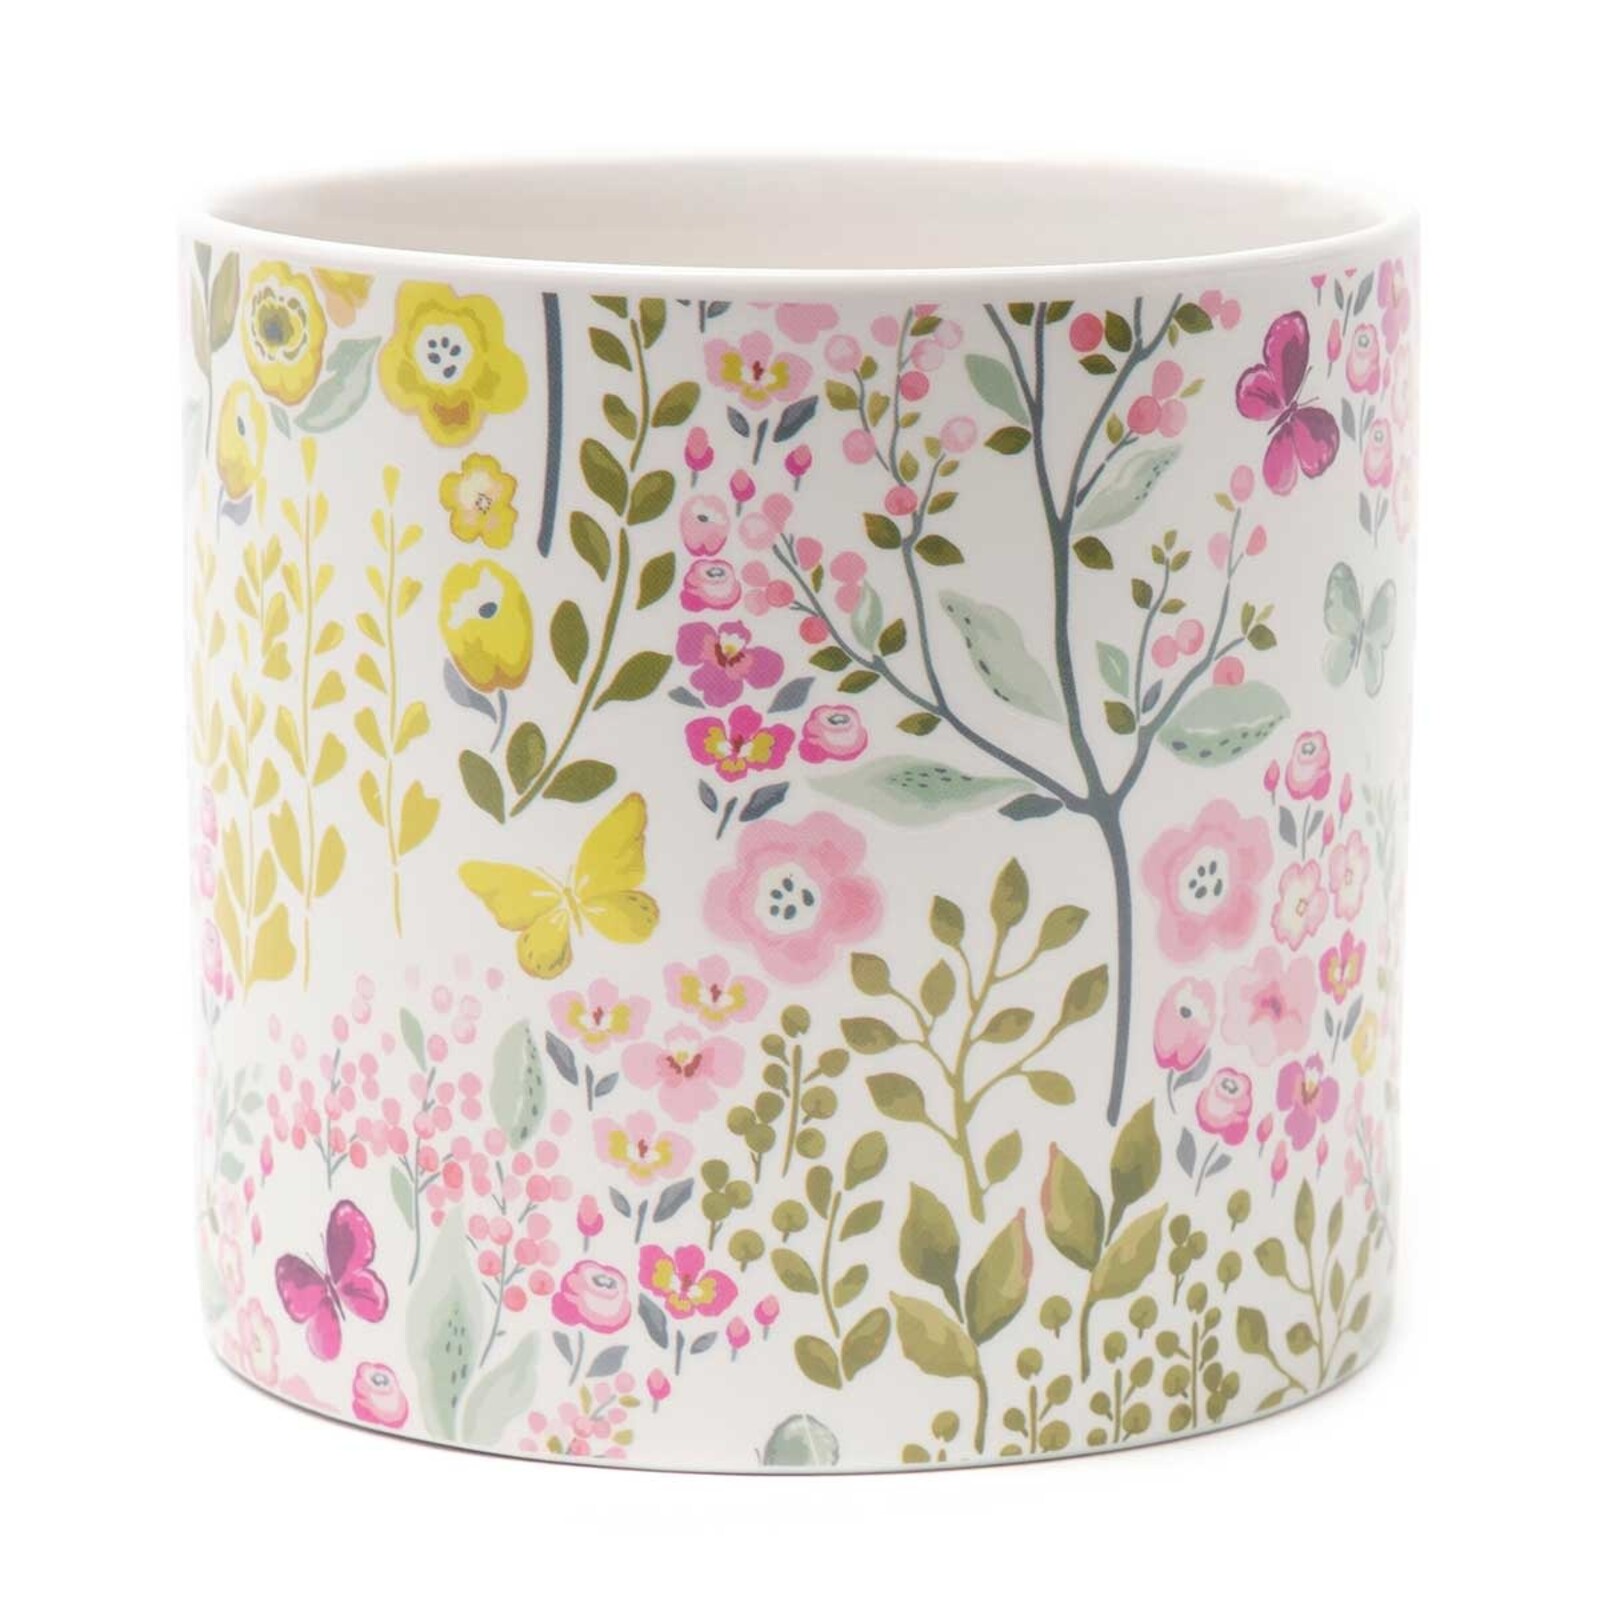 Meravic Floral Garden Porcelain Pot White Large 5"x5"x4.75"  A3190 loading=